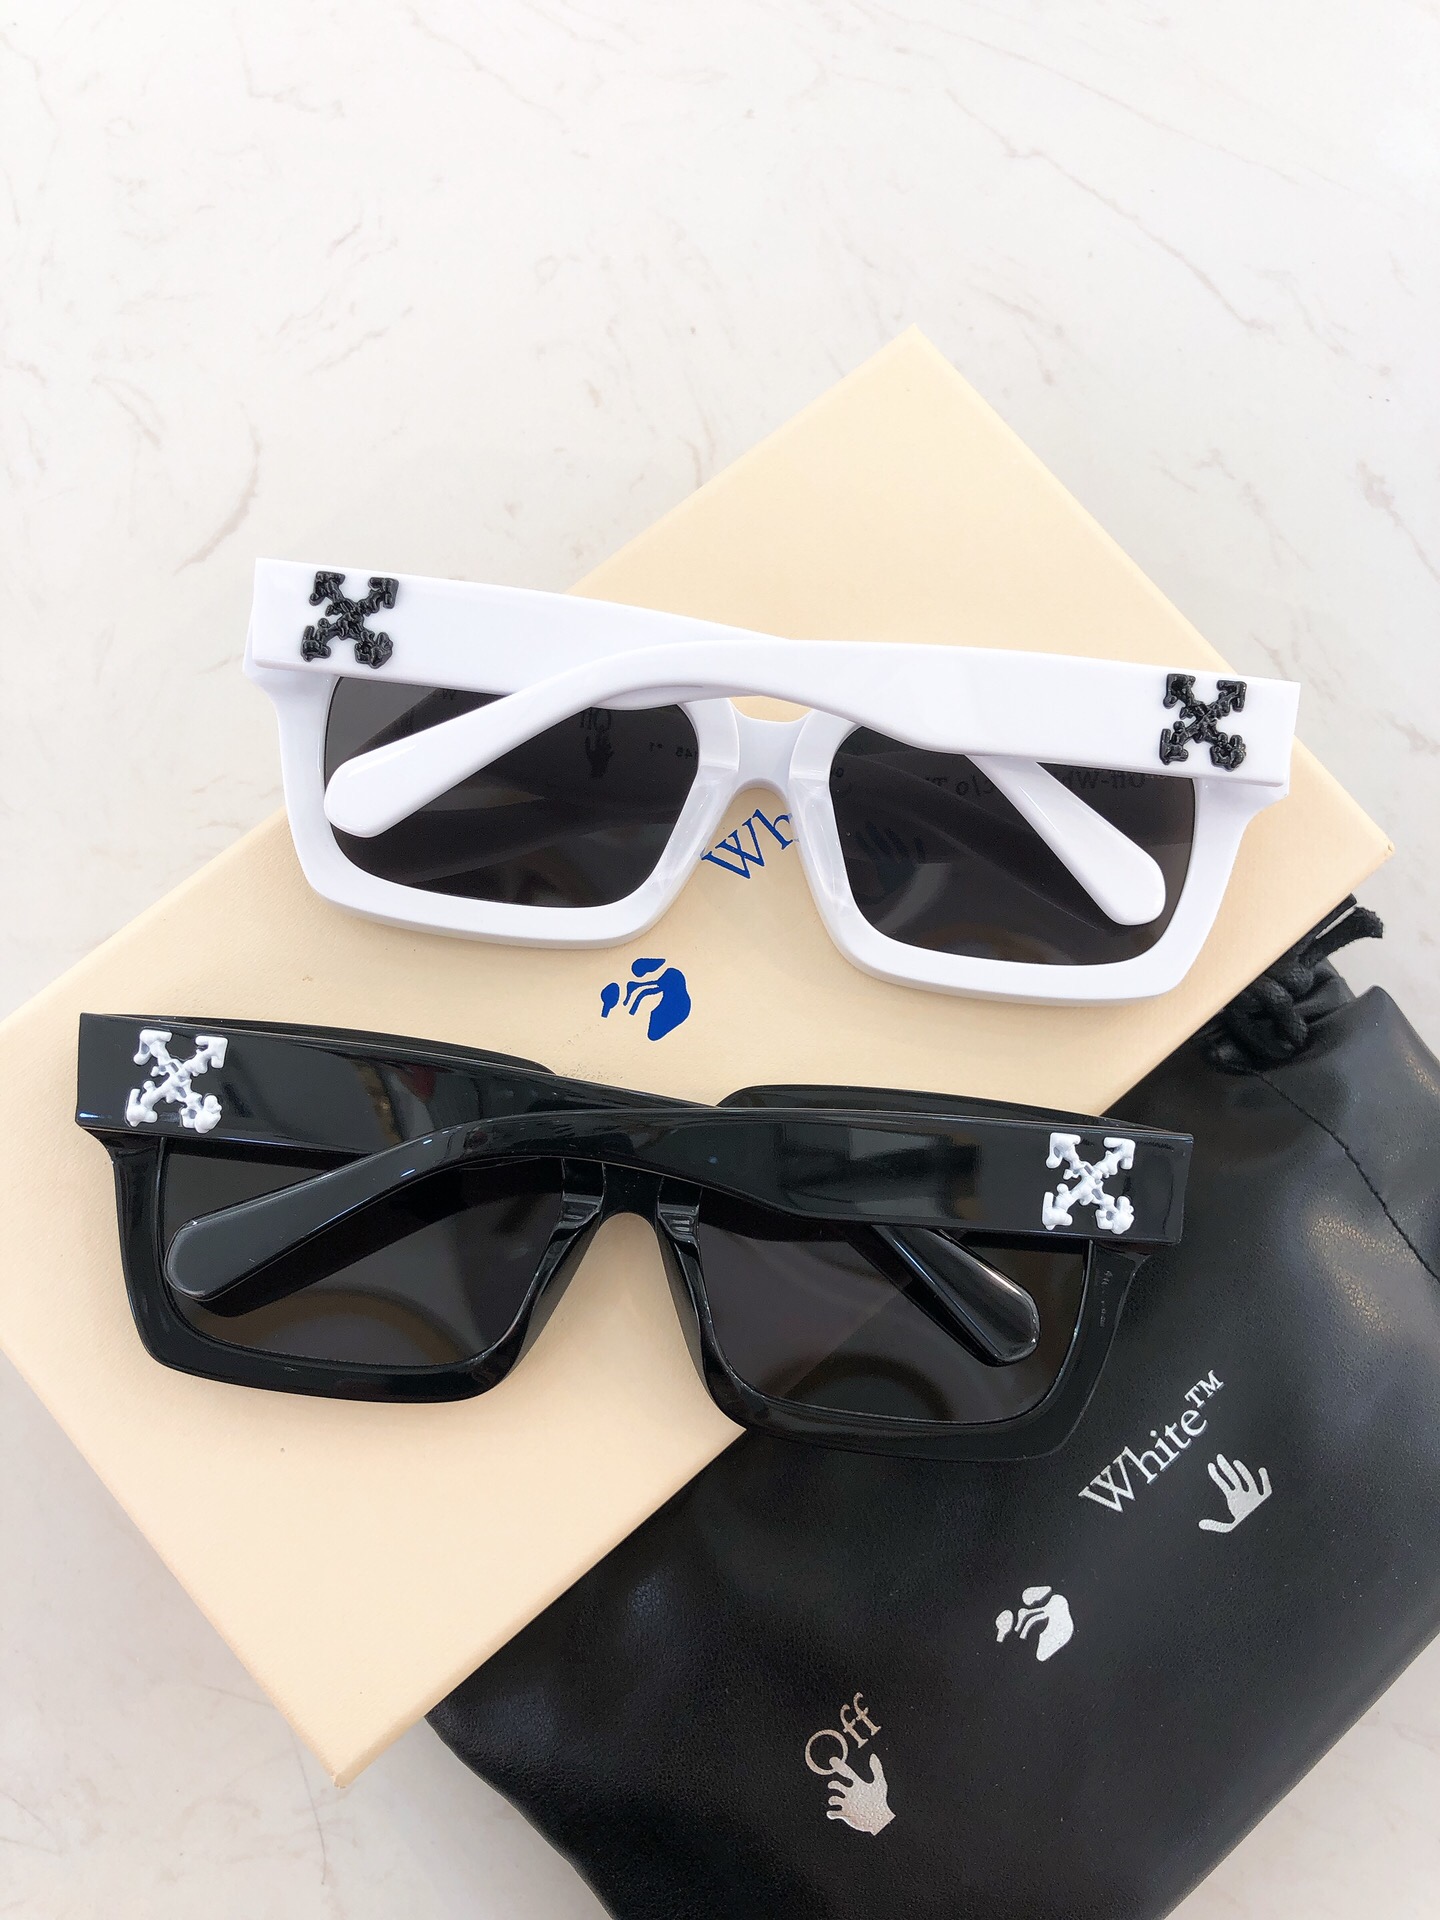 White 'Virgil' sunglasses Off-White - Vitkac HK